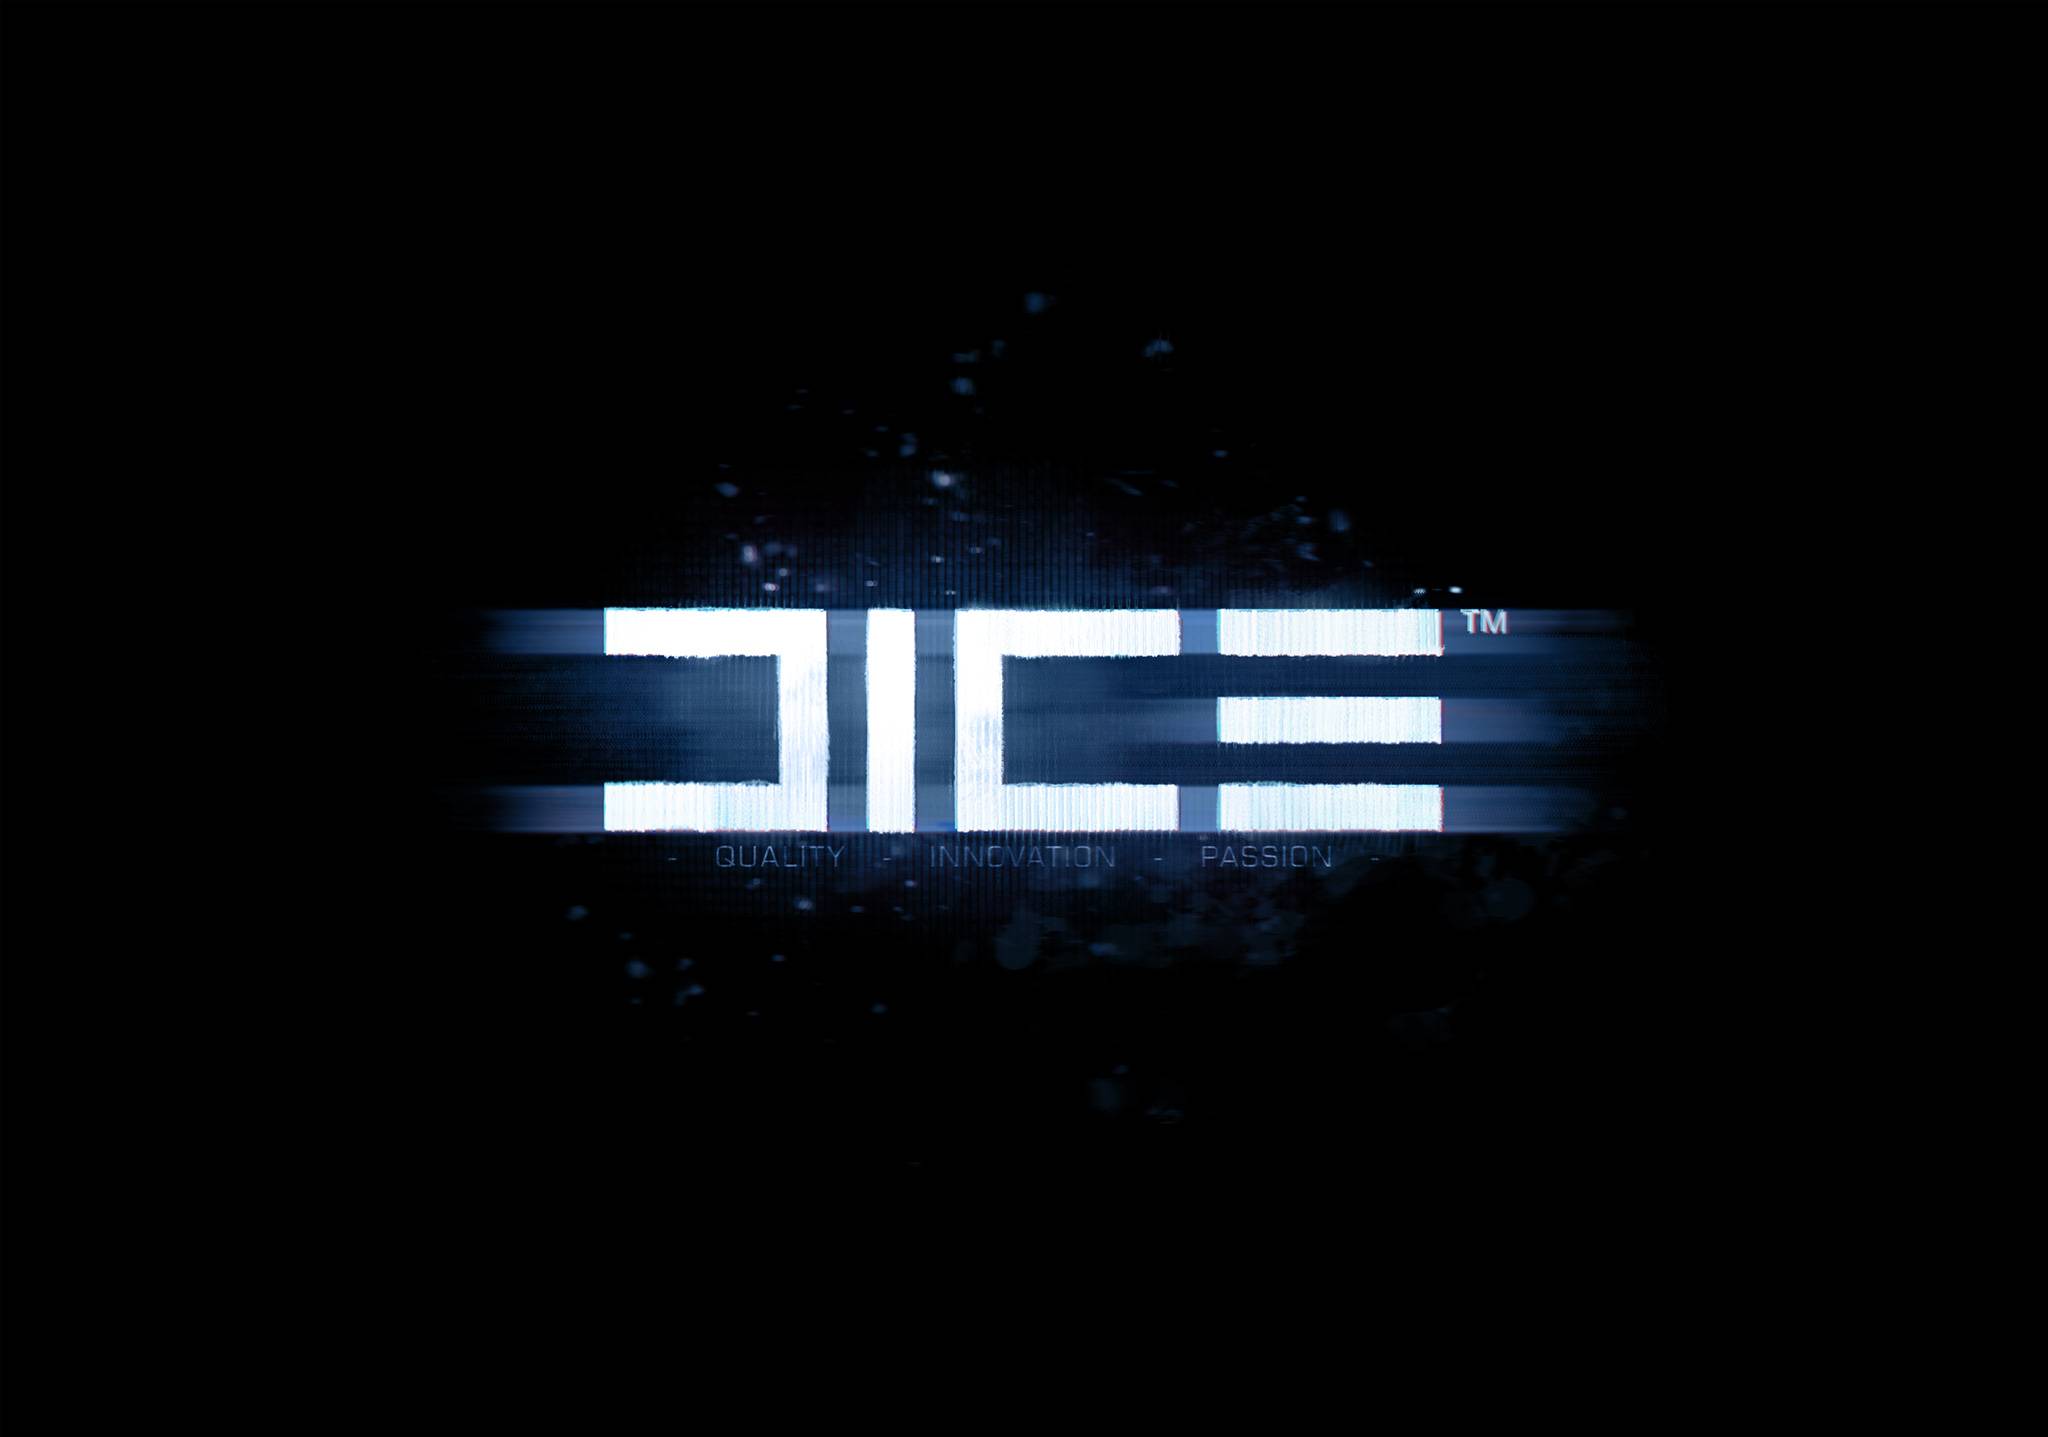 dice-logotype-wallpaper